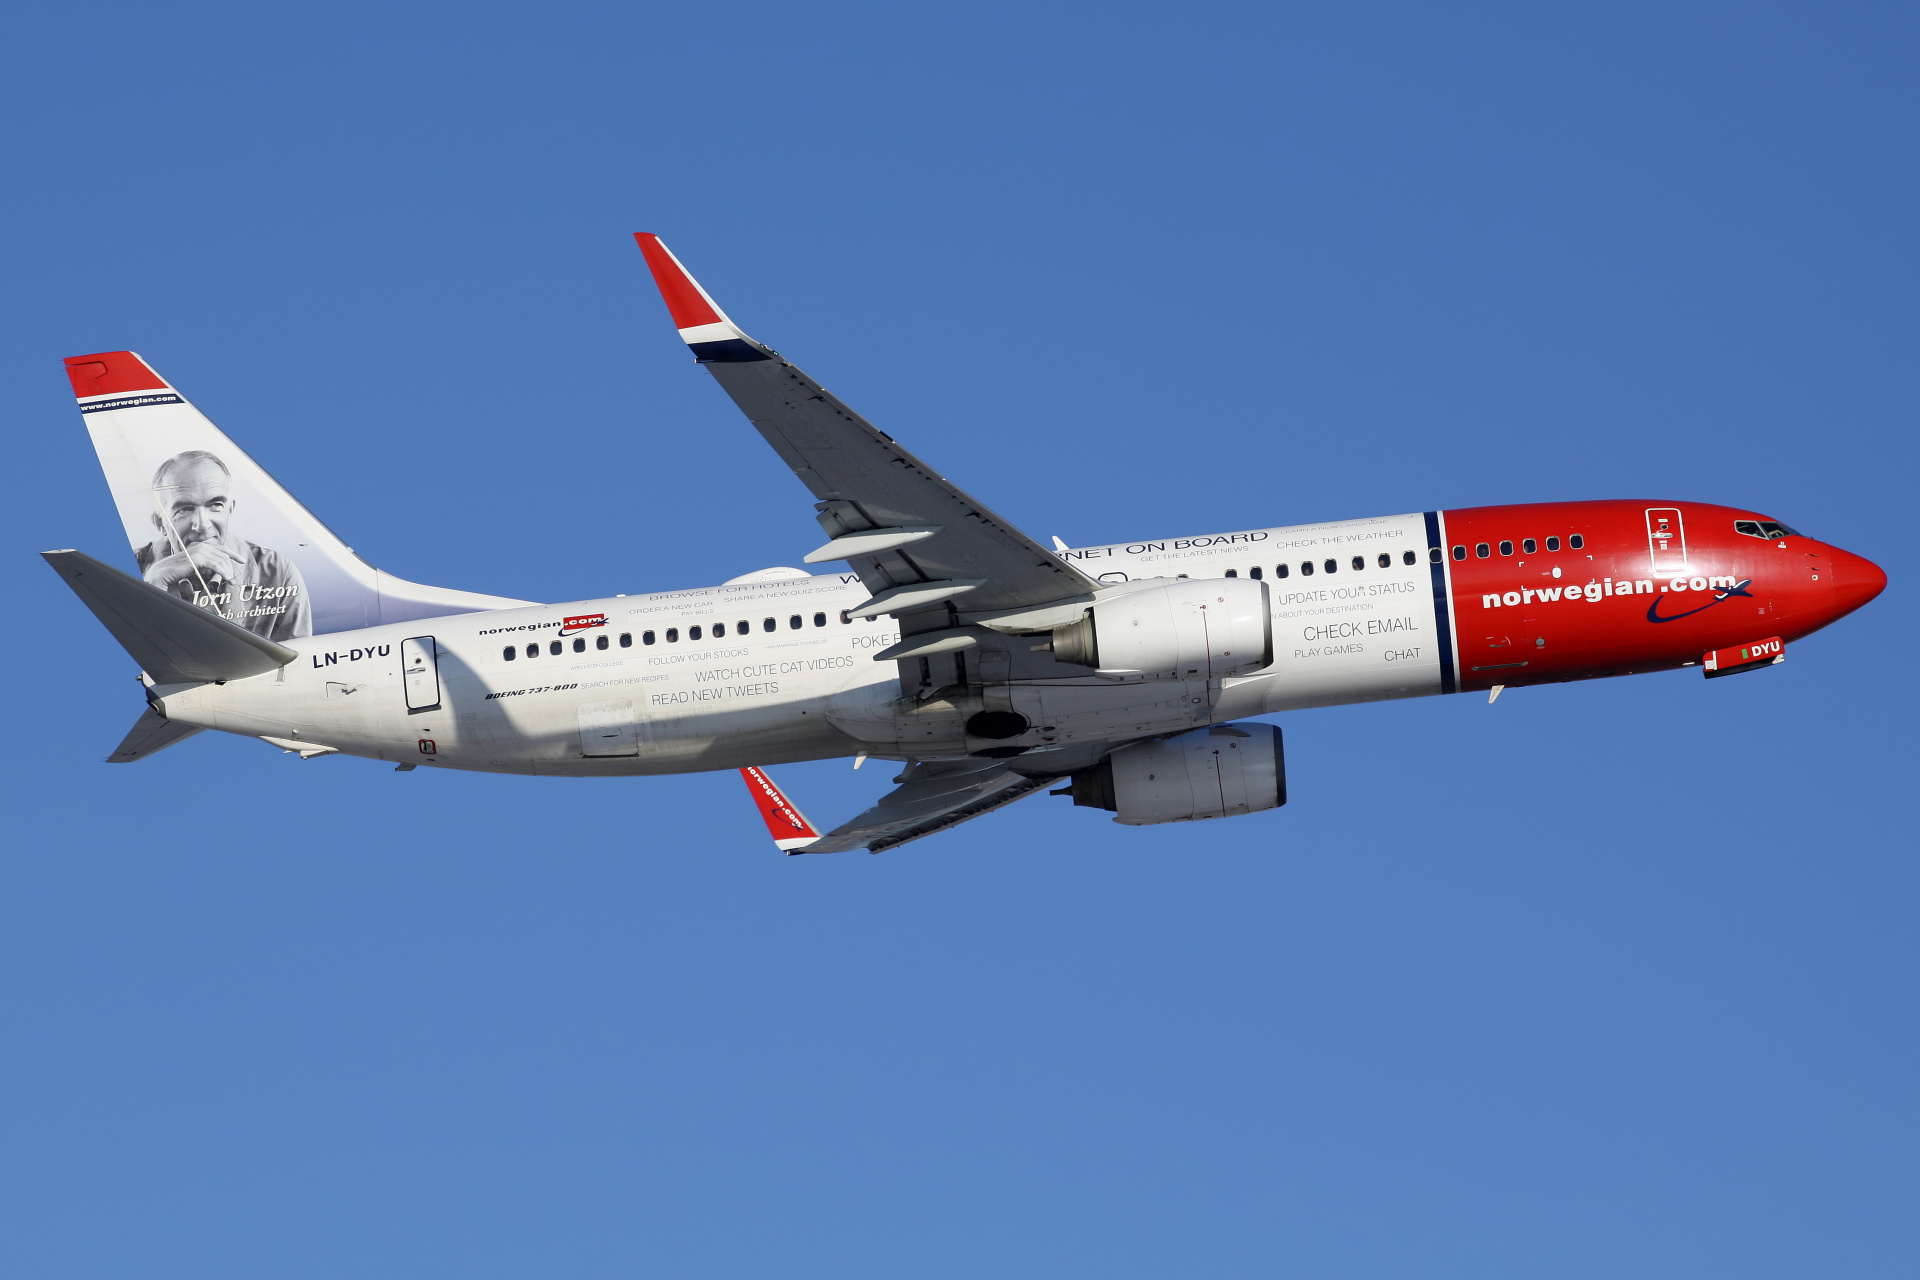 LN-DYU, Norwegian Air Shuttle (WiFi on Board livery) (Aircraft » EPWA Spotting » Boeing 737-800 » Norwegian Air)